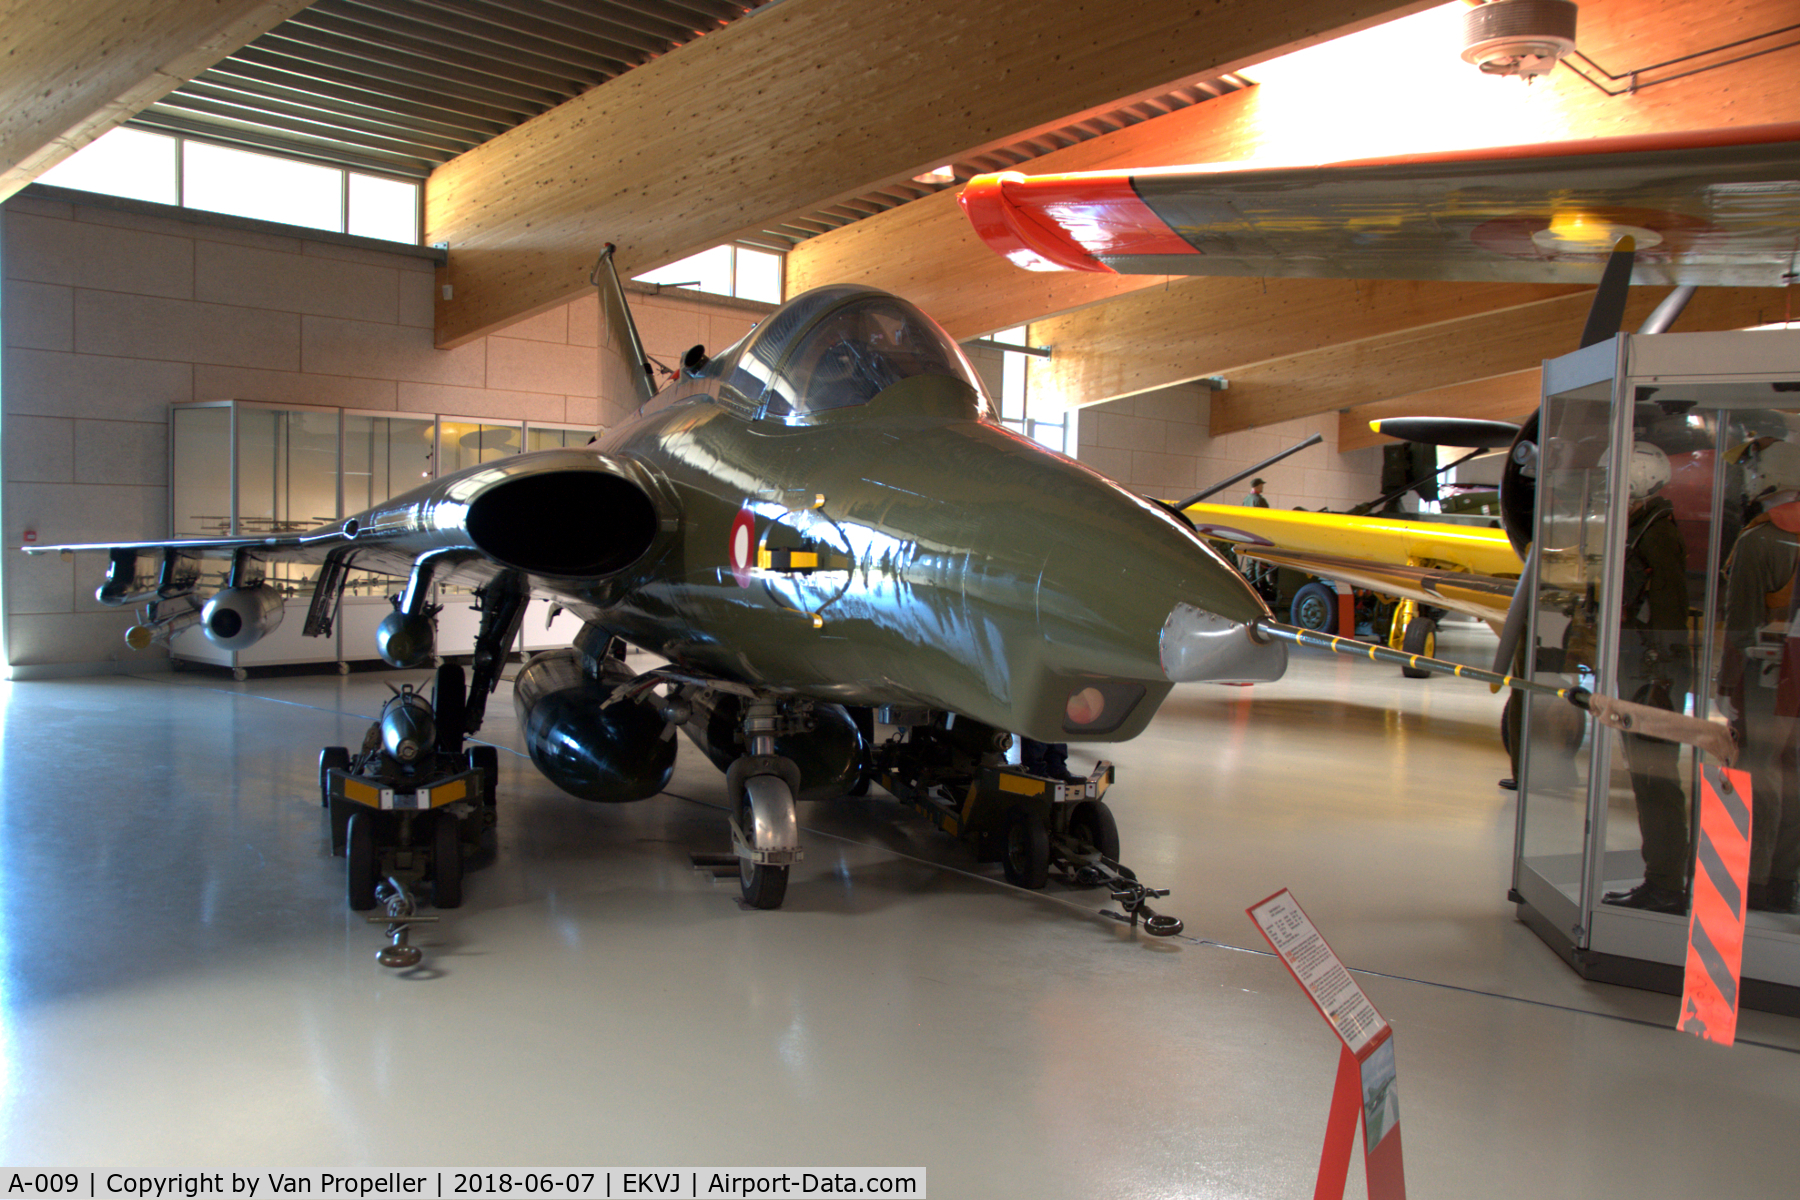 A-009, 1970 Saab F-35 Draken C/N 35-1009, Royal Danish Air Force Saab F-35 Draken preserved in Danmarks Flymuseum at Stauning airport